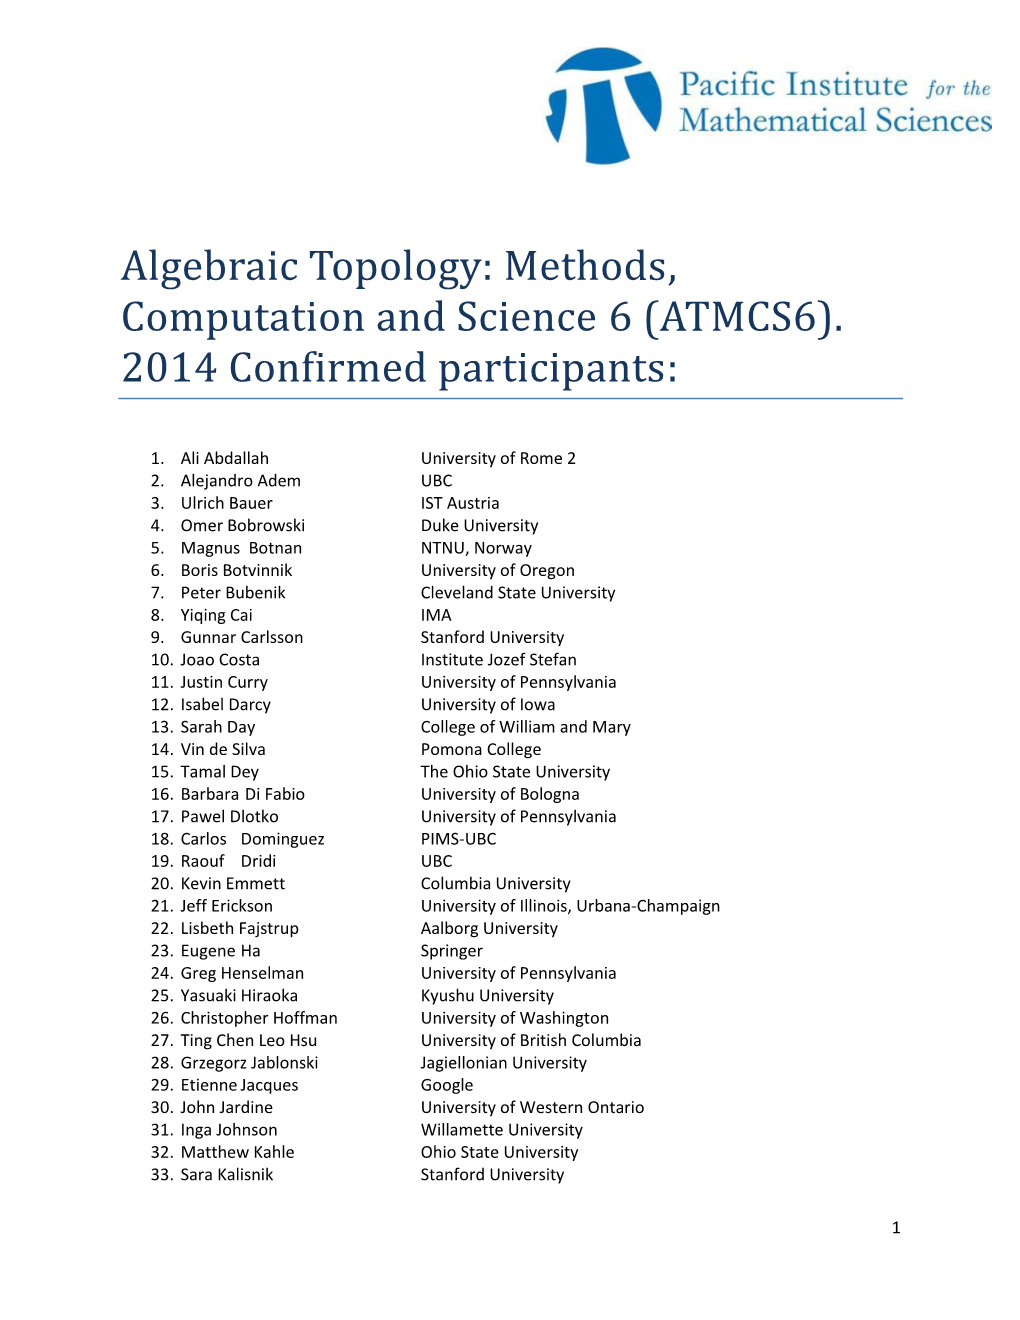 Algebraic Topology: Methods, Computation and Science 6 (ATMCS6)